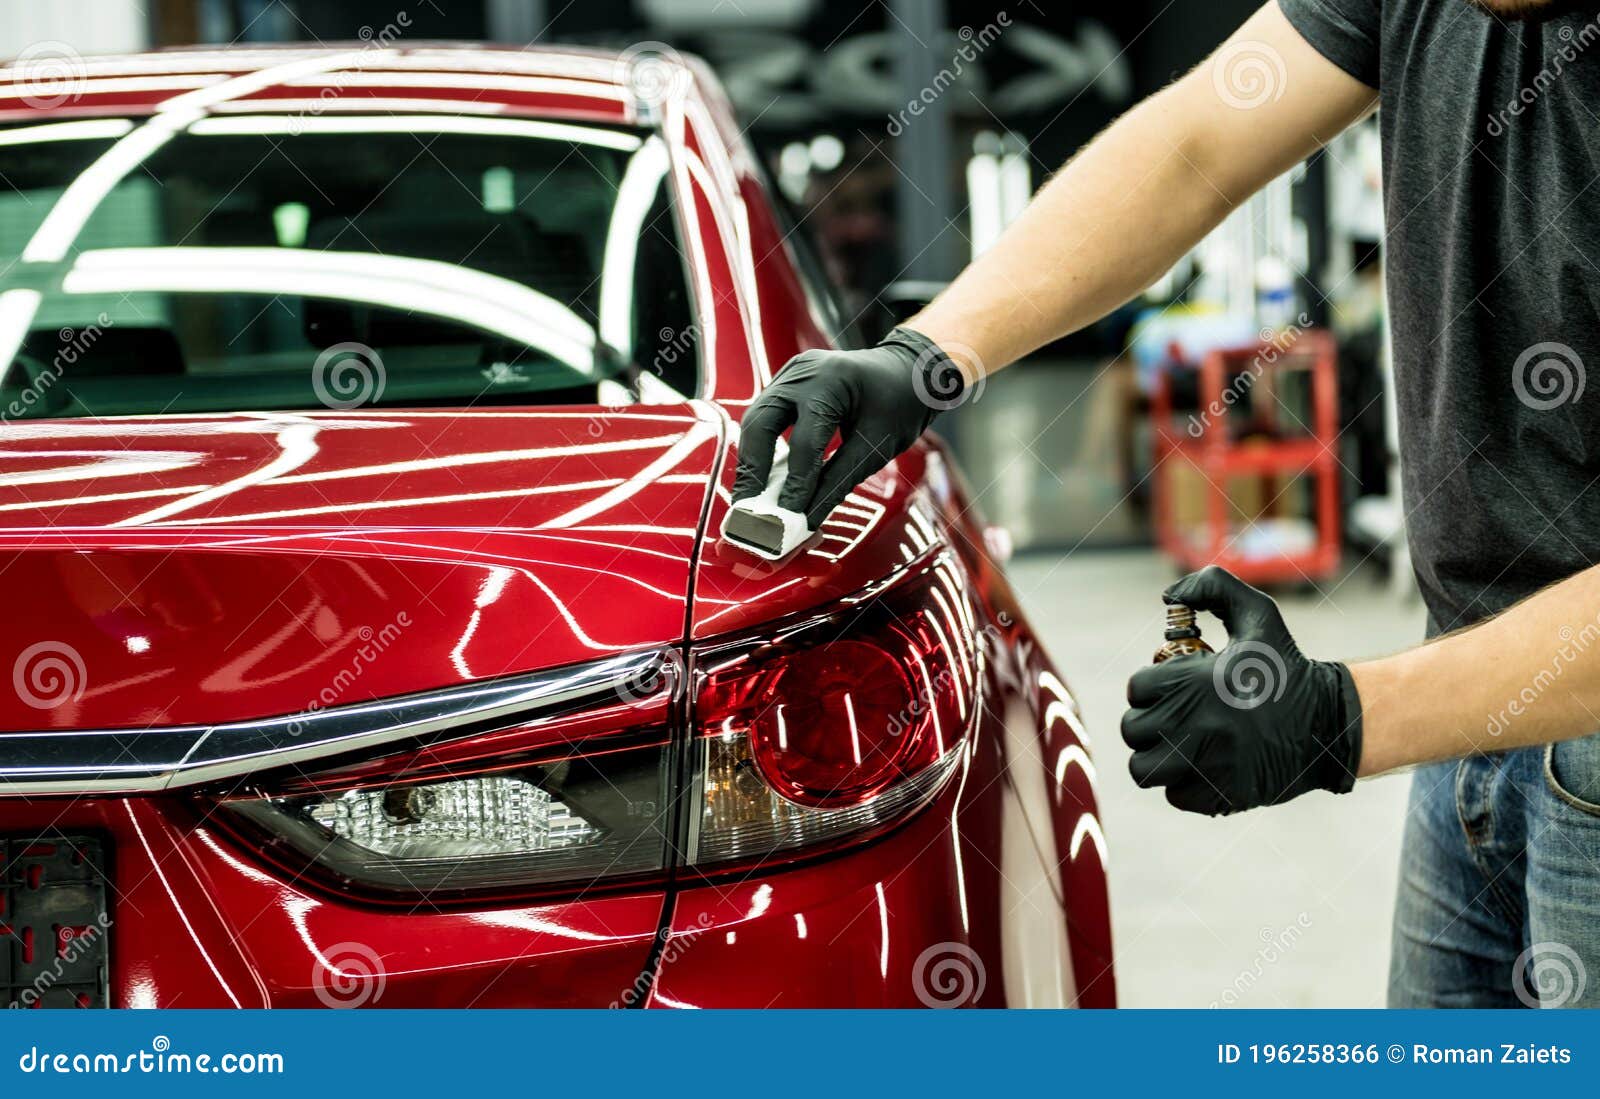 car service worker applying nano coating on a car detail.